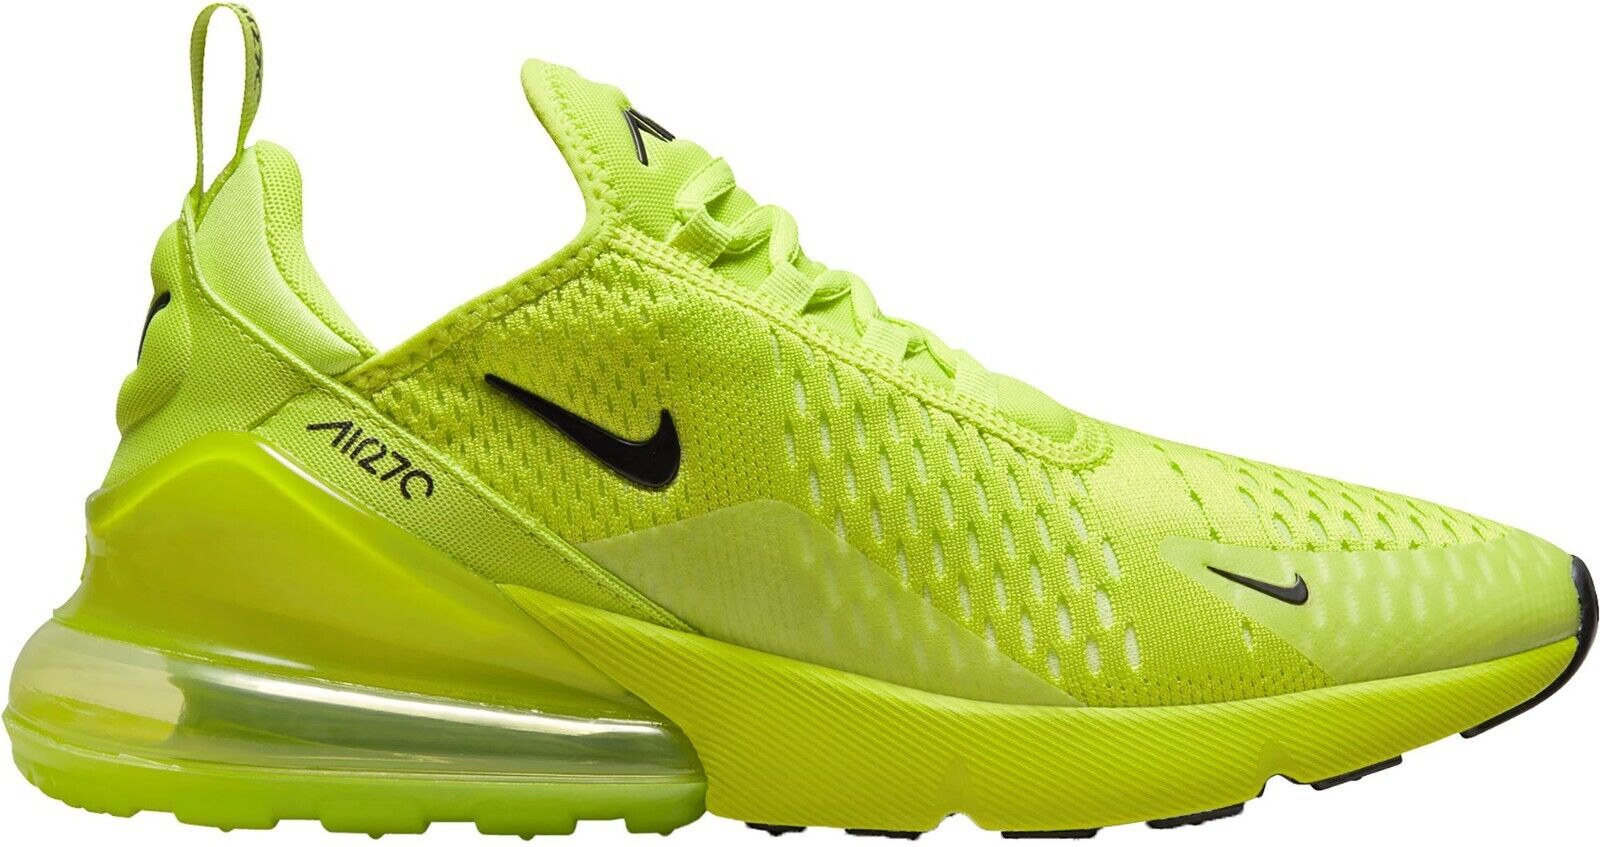 Nike Air Max 270 DV2226-300 Women's Atomic Green & Black Tennis Ball Shoes DDJJ9 (8.5) - image 1 of 5